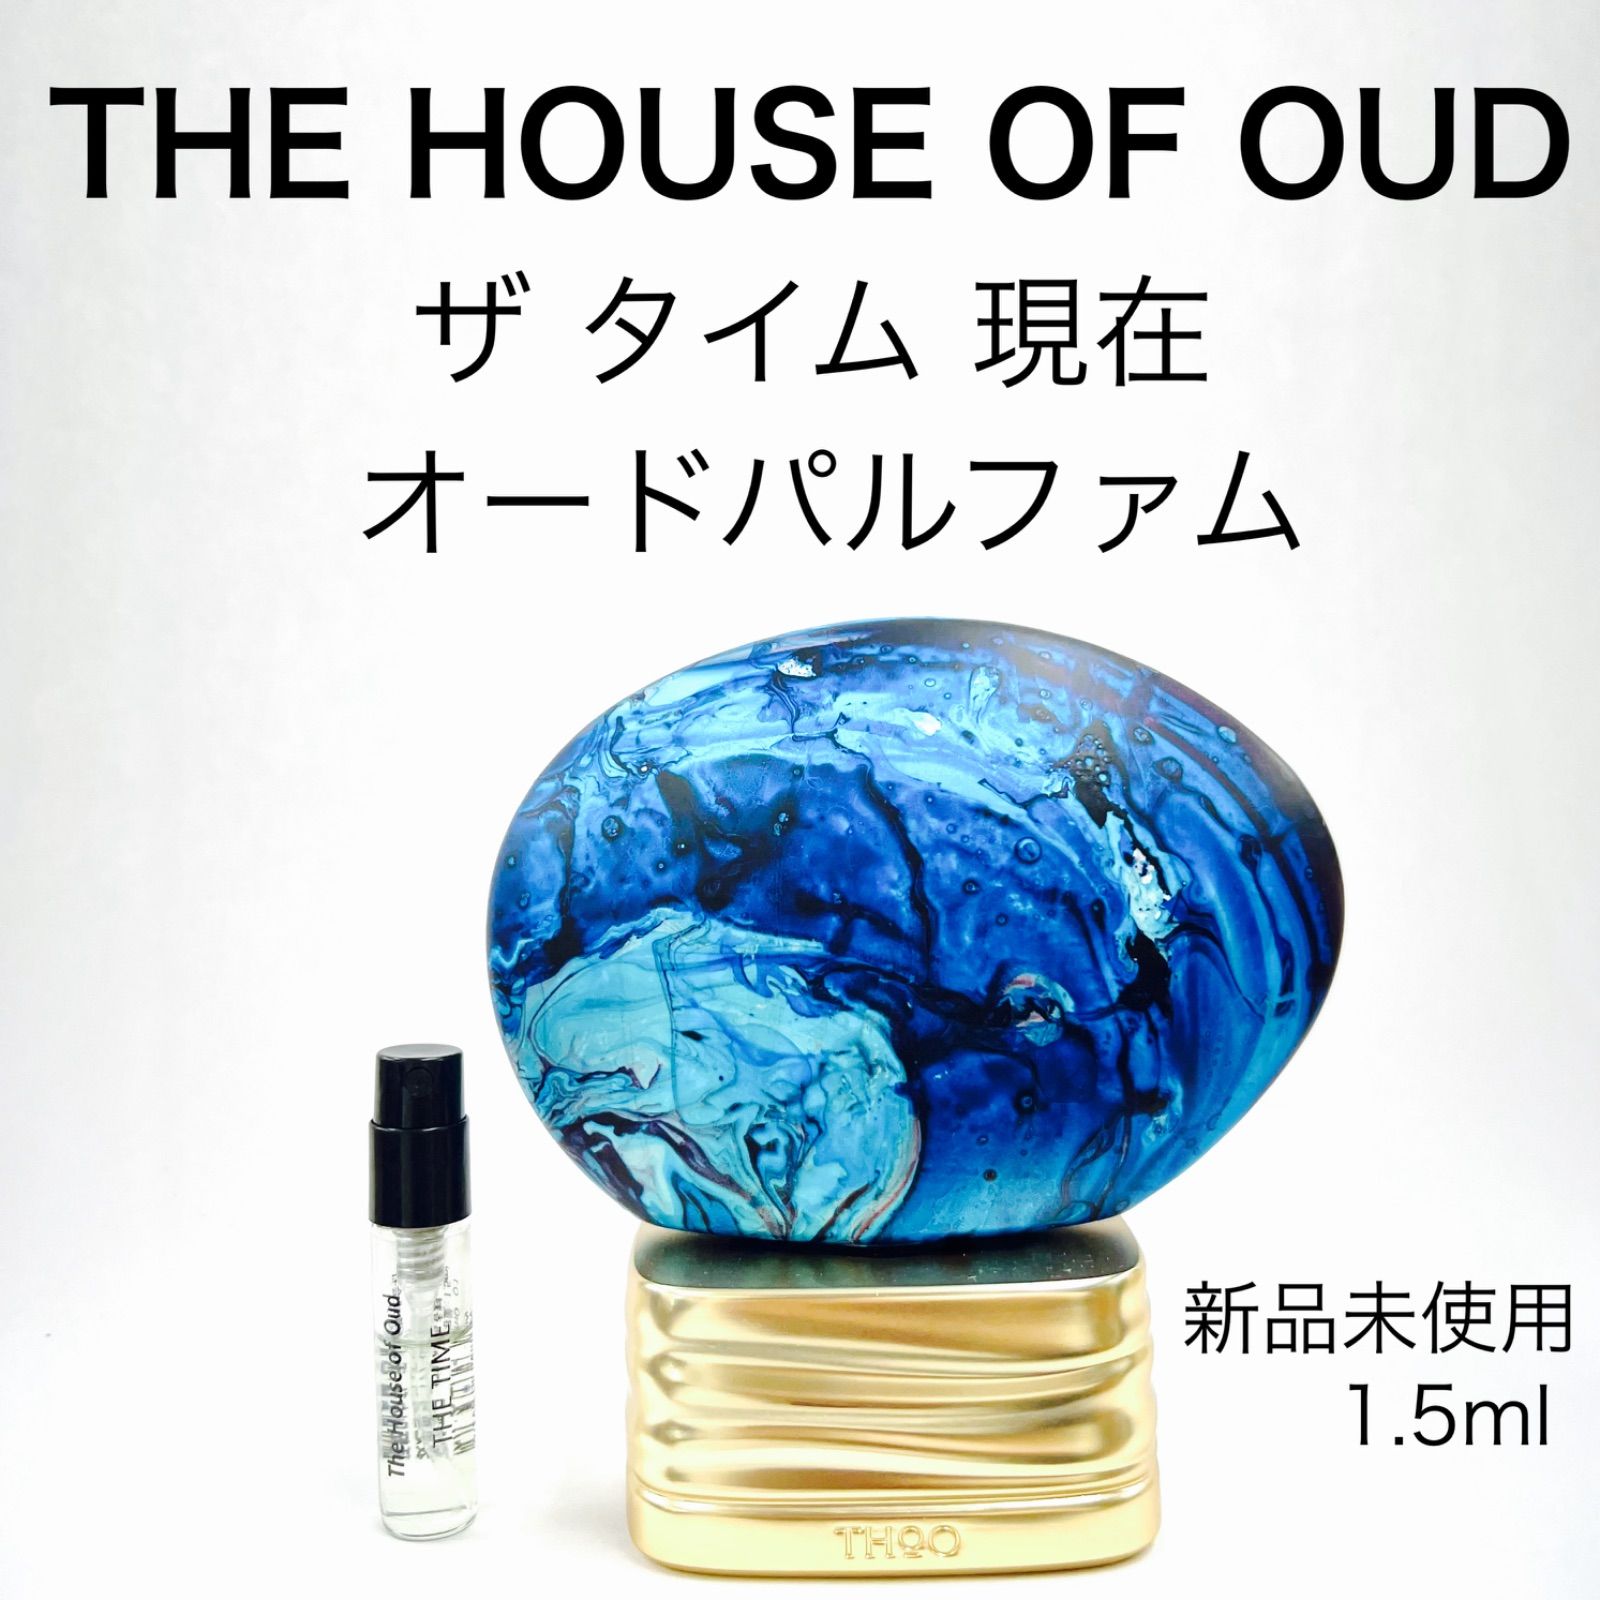 The House of Oud ザタイム 現在 香水 1.5ml - メルカリ